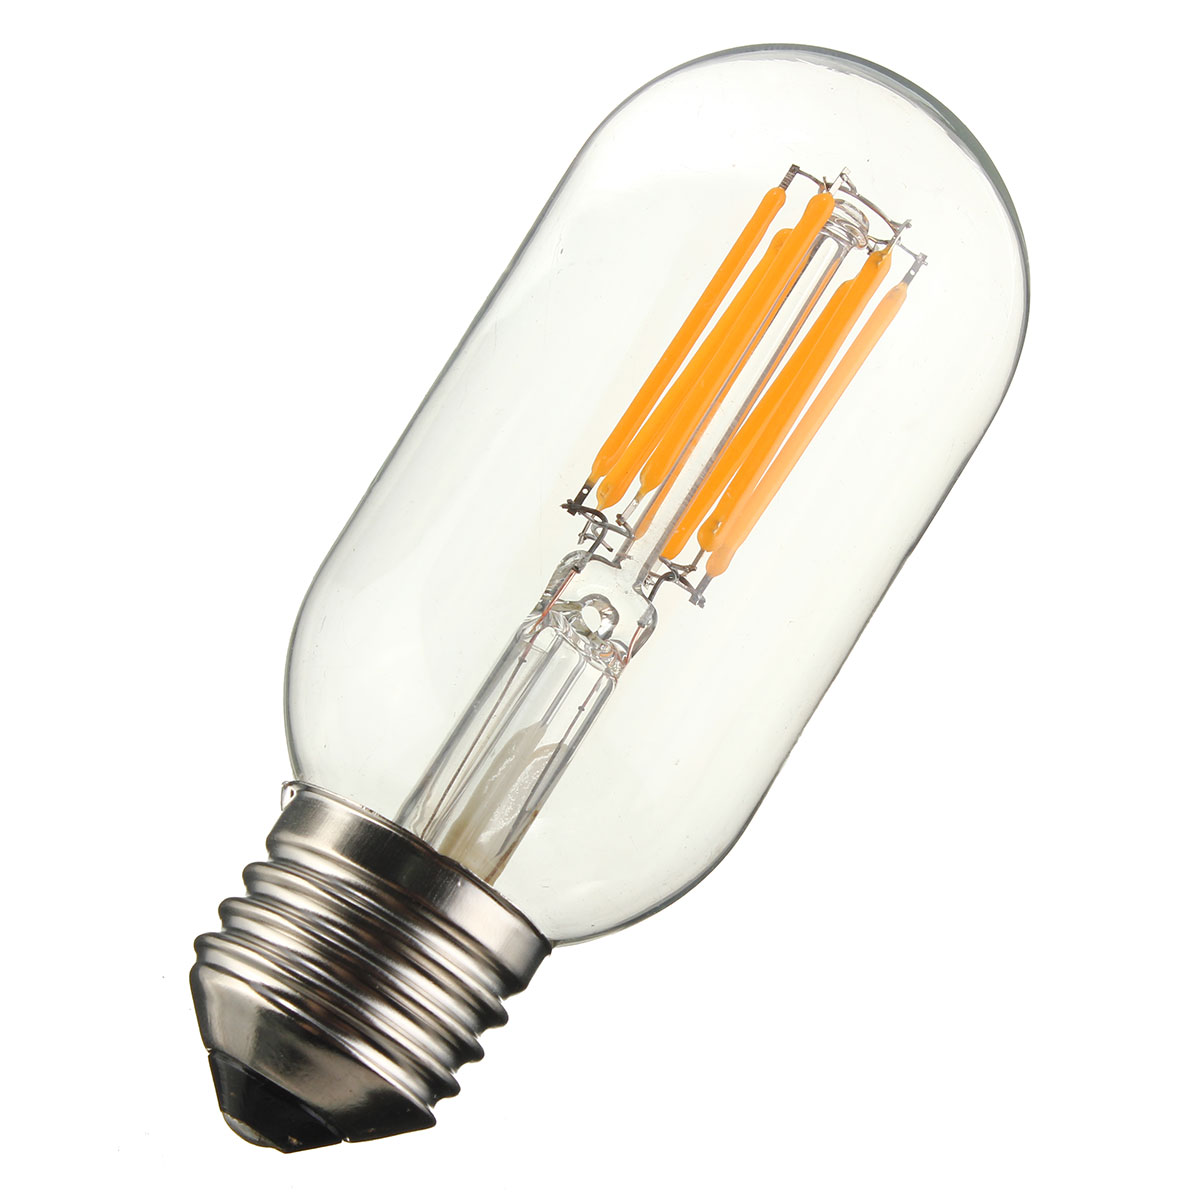 Dimmable-E27-E26-T45-6W-COB-Incandescent-Warm-White-Edsion-Restro-Light-Lamp-Bulb-AC110V-AC220V-1074235-9